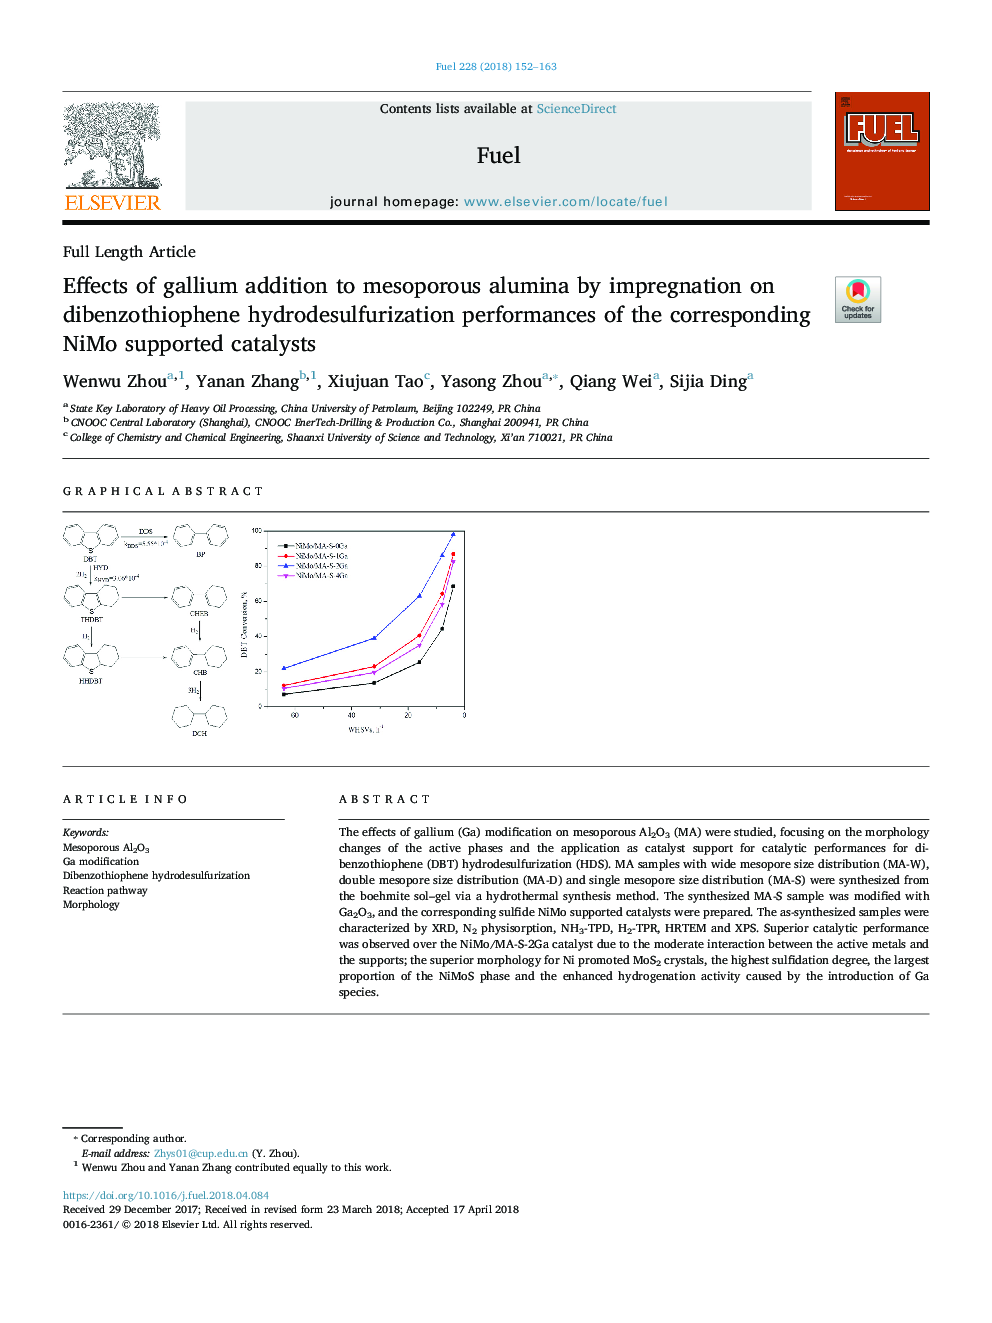 Effects of gallium addition to mesoporous alumina by impregnation on dibenzothiophene hydrodesulfurization performances of the corresponding NiMo supported catalysts